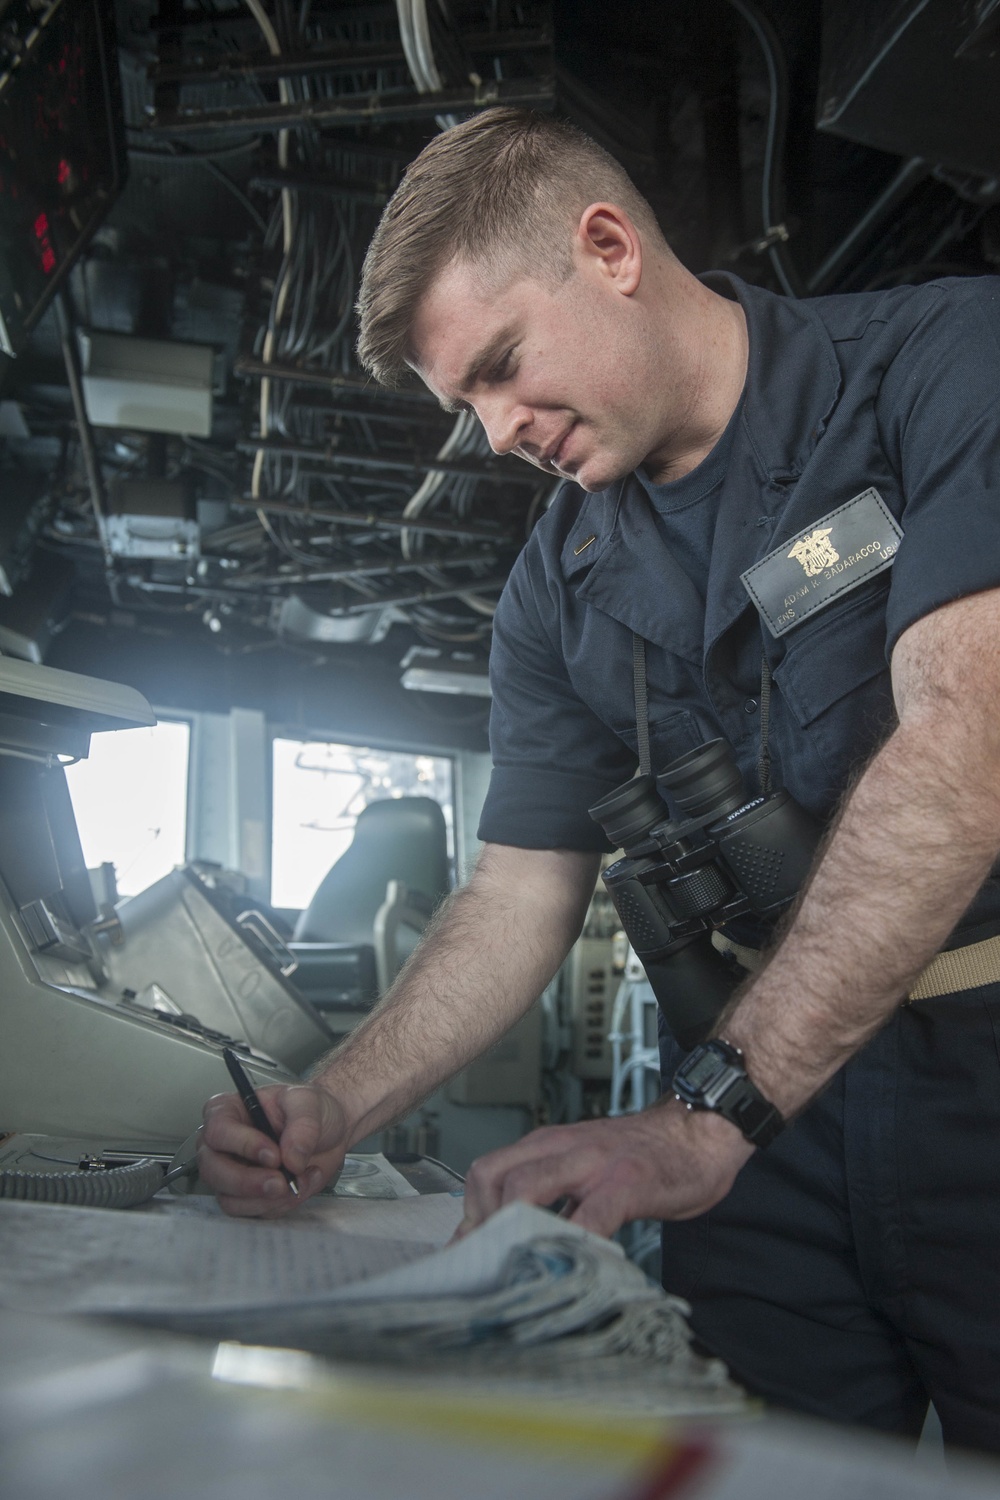 USS America Sailor records aircraft reports